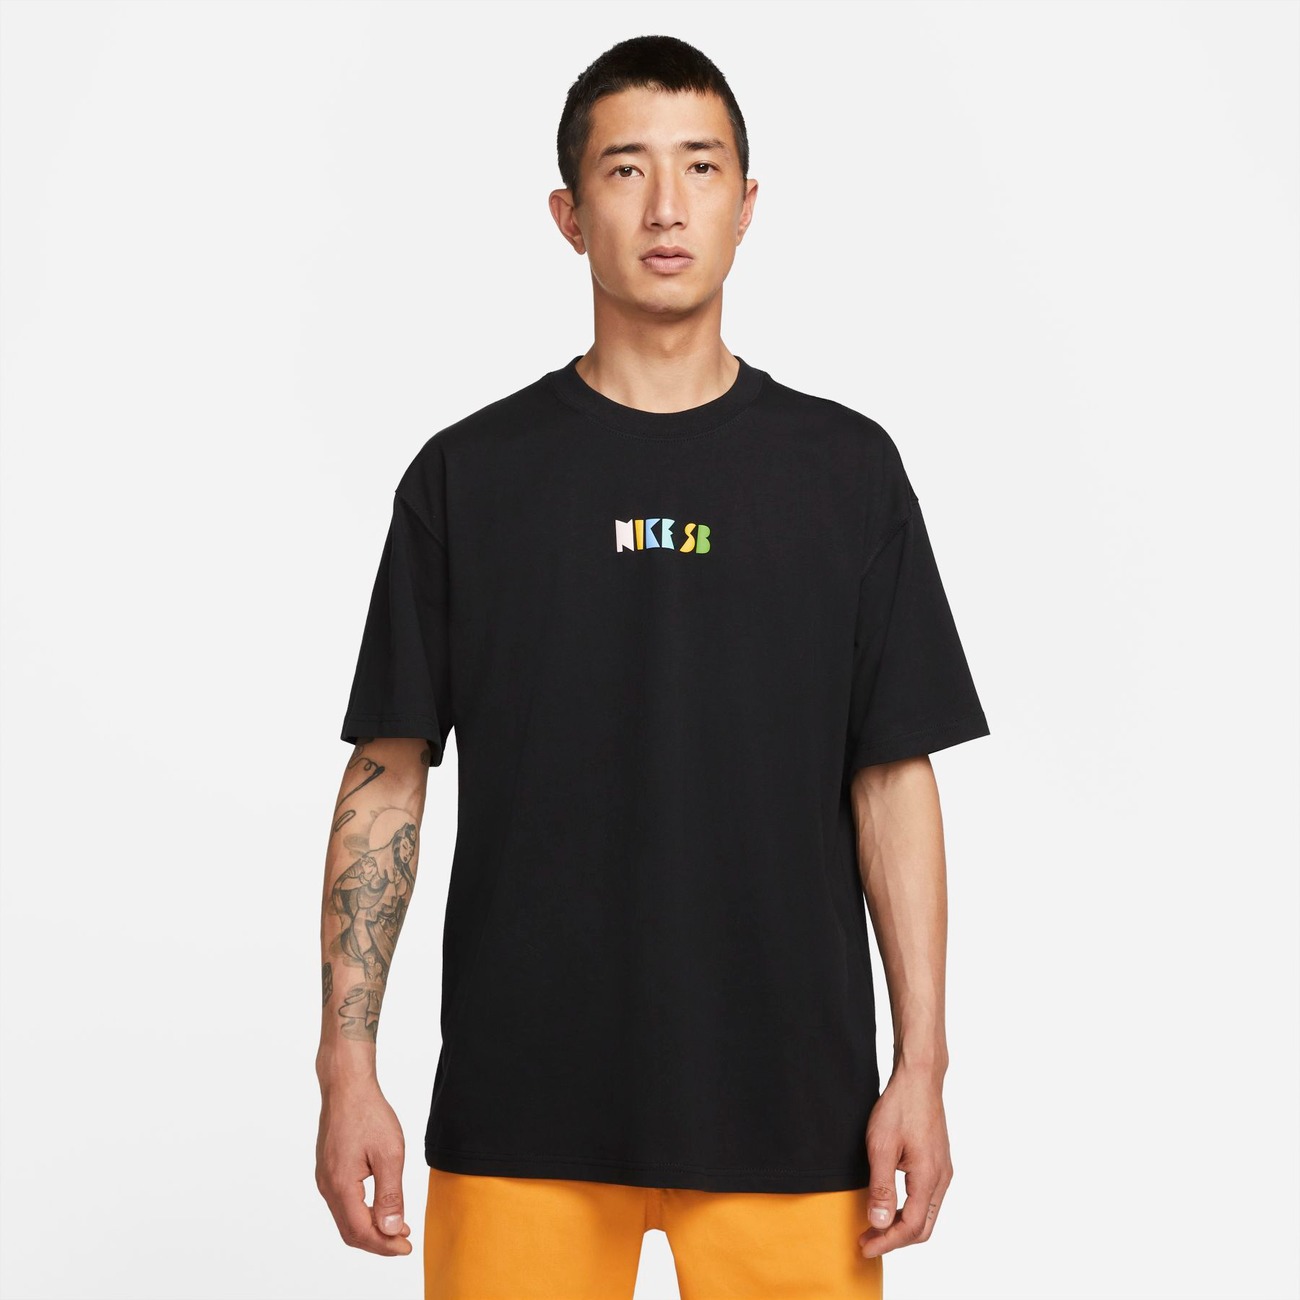 Camiseta Nike SB Masculina - Foto 2